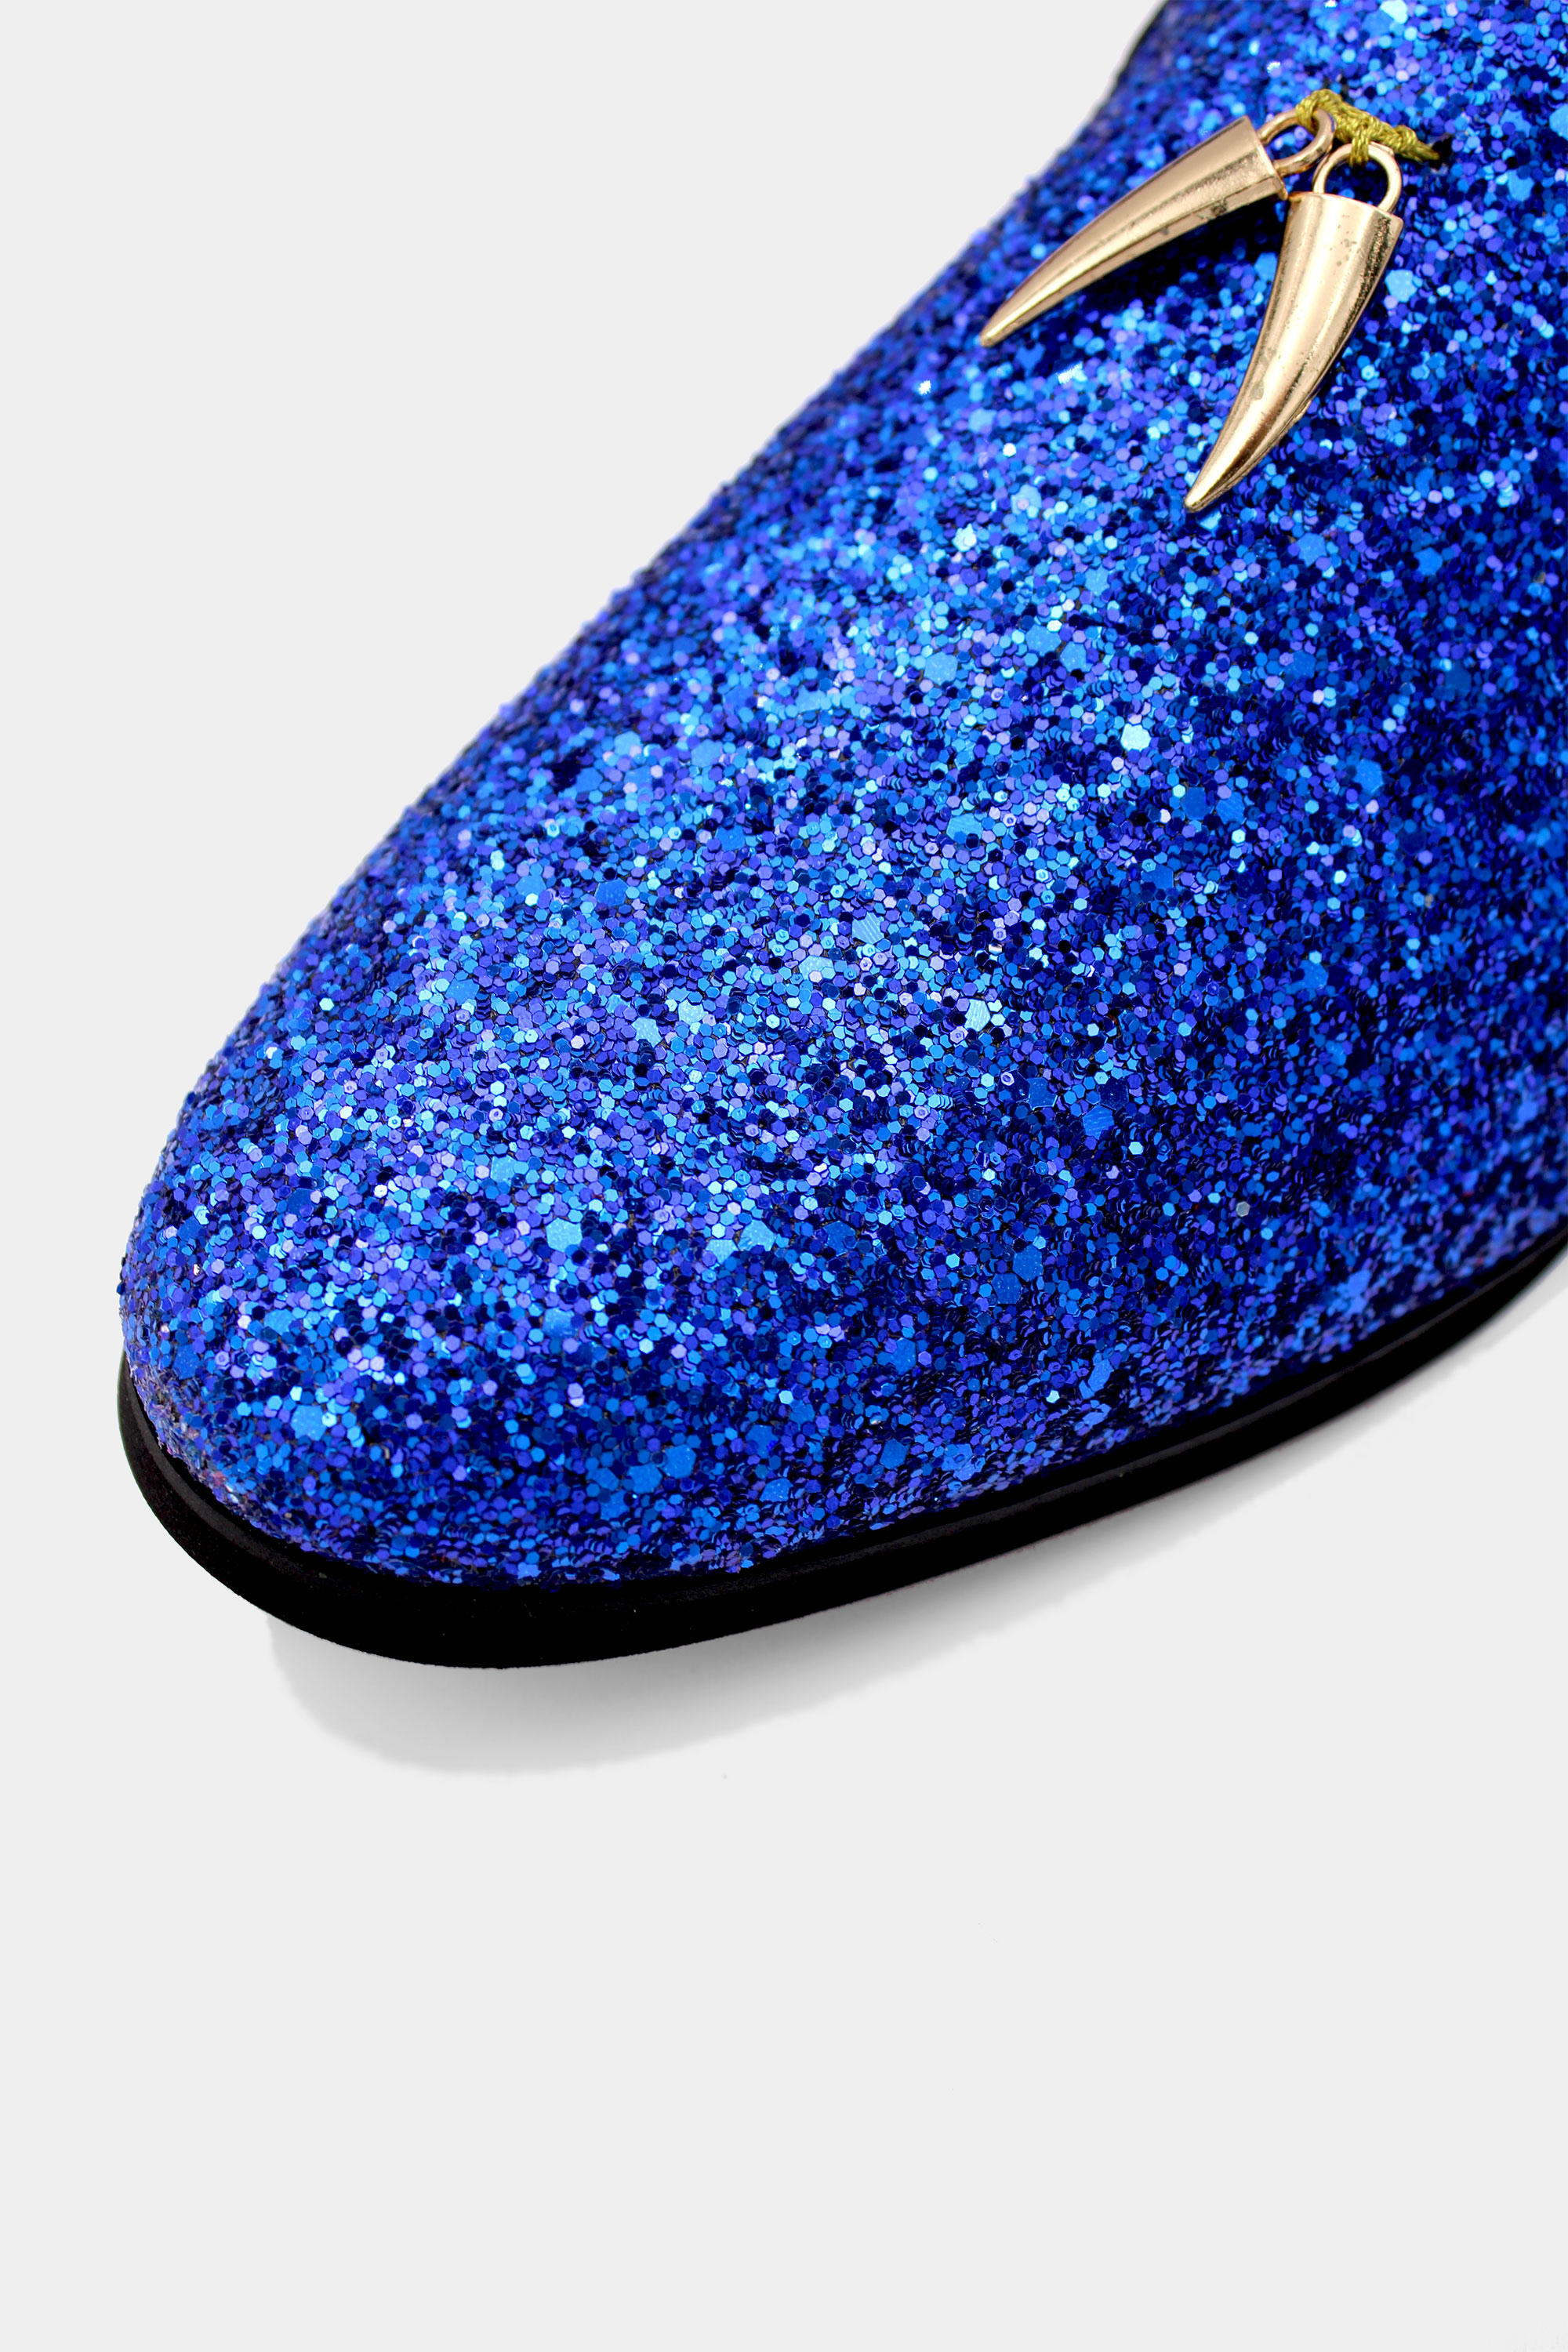 Sparkly-Glitter-Blue-Loafers-Shoes-from-Gentlemansguru.com